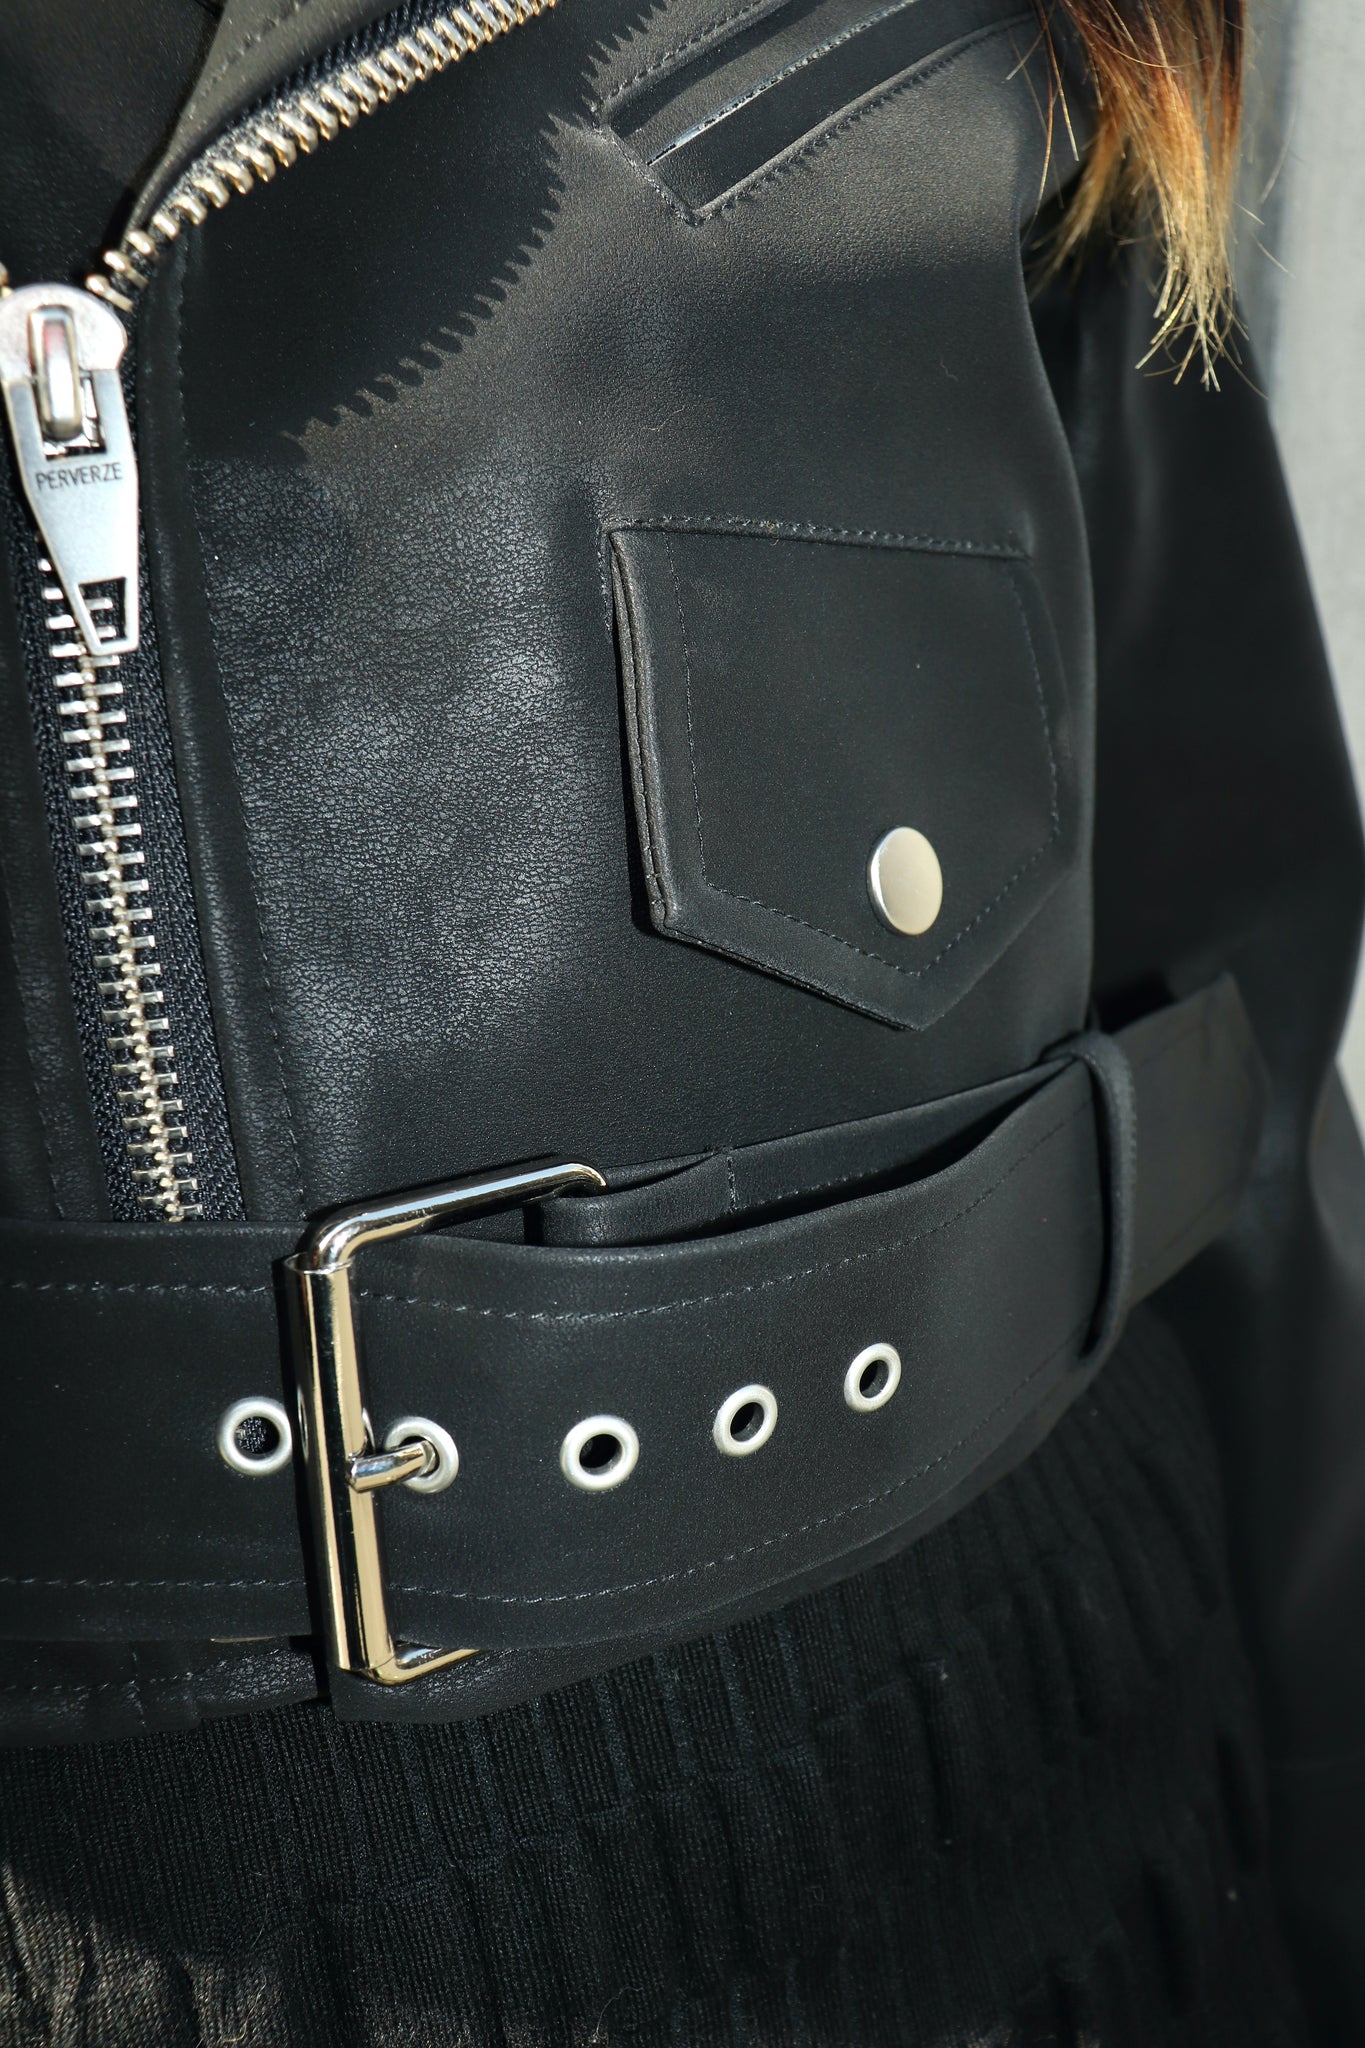 perverze 22AW Re-Leather Riders Jacketを使用したスタイリング画像